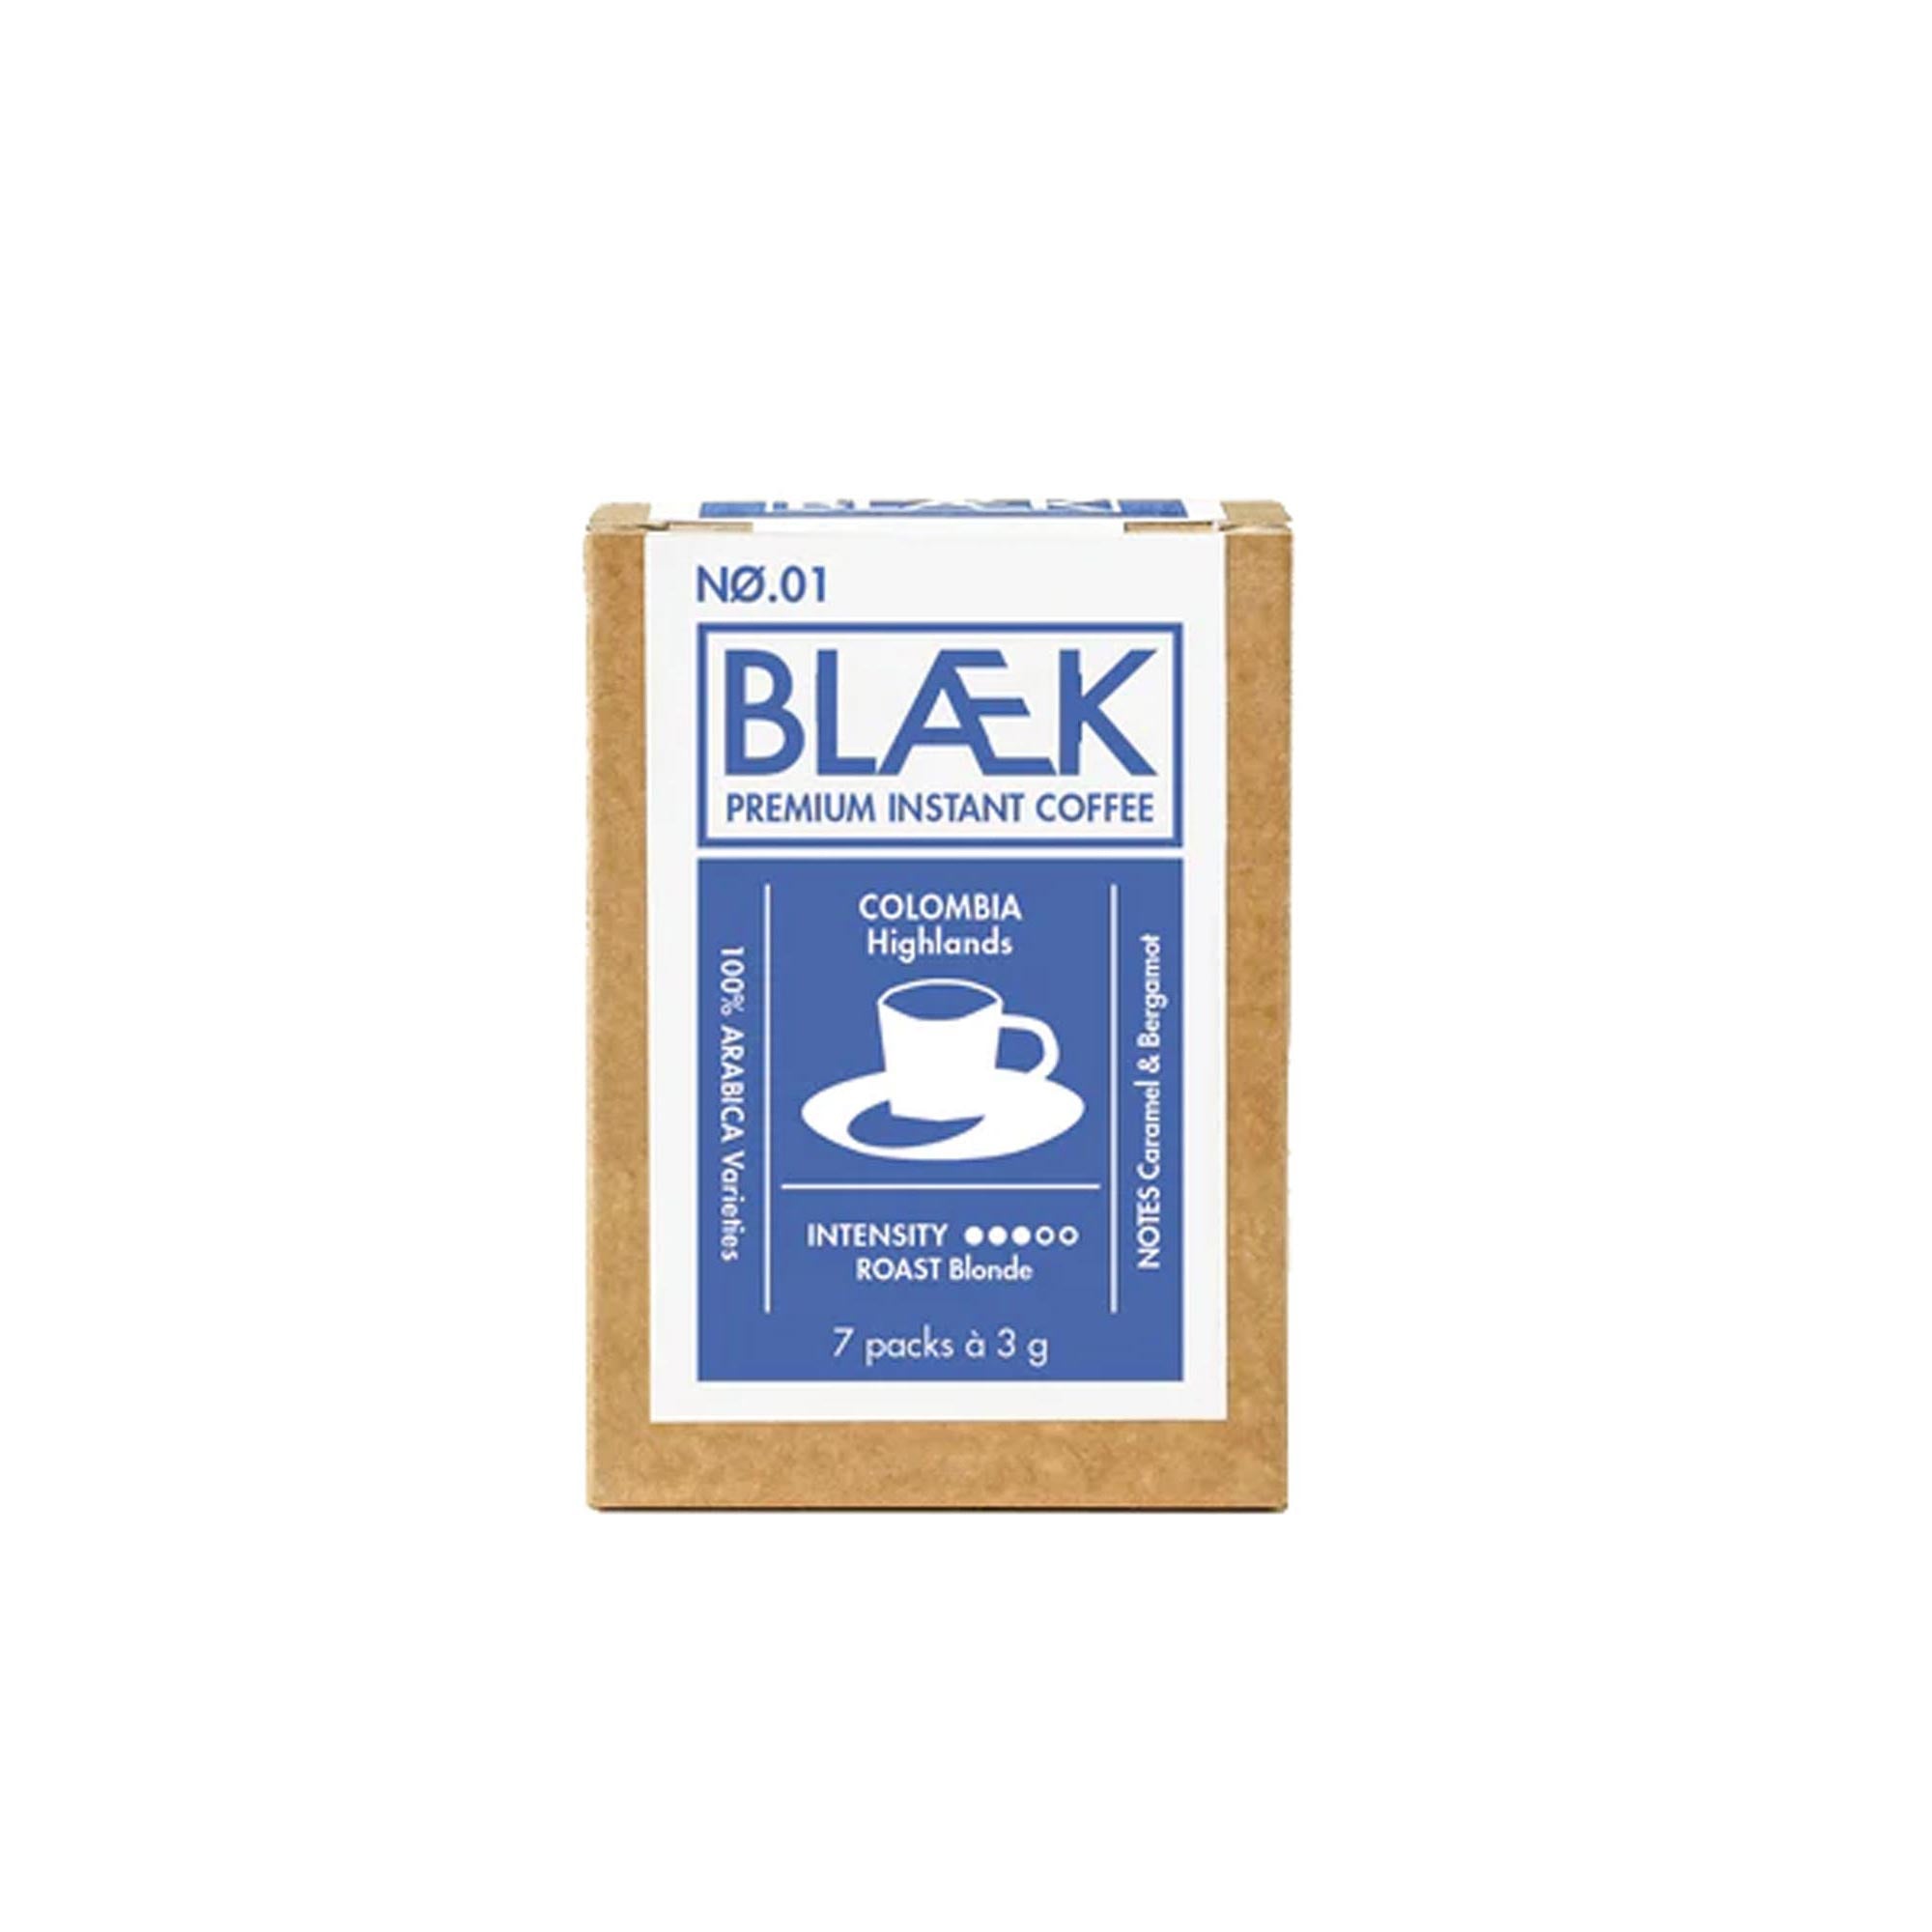 Blaek instant coffee